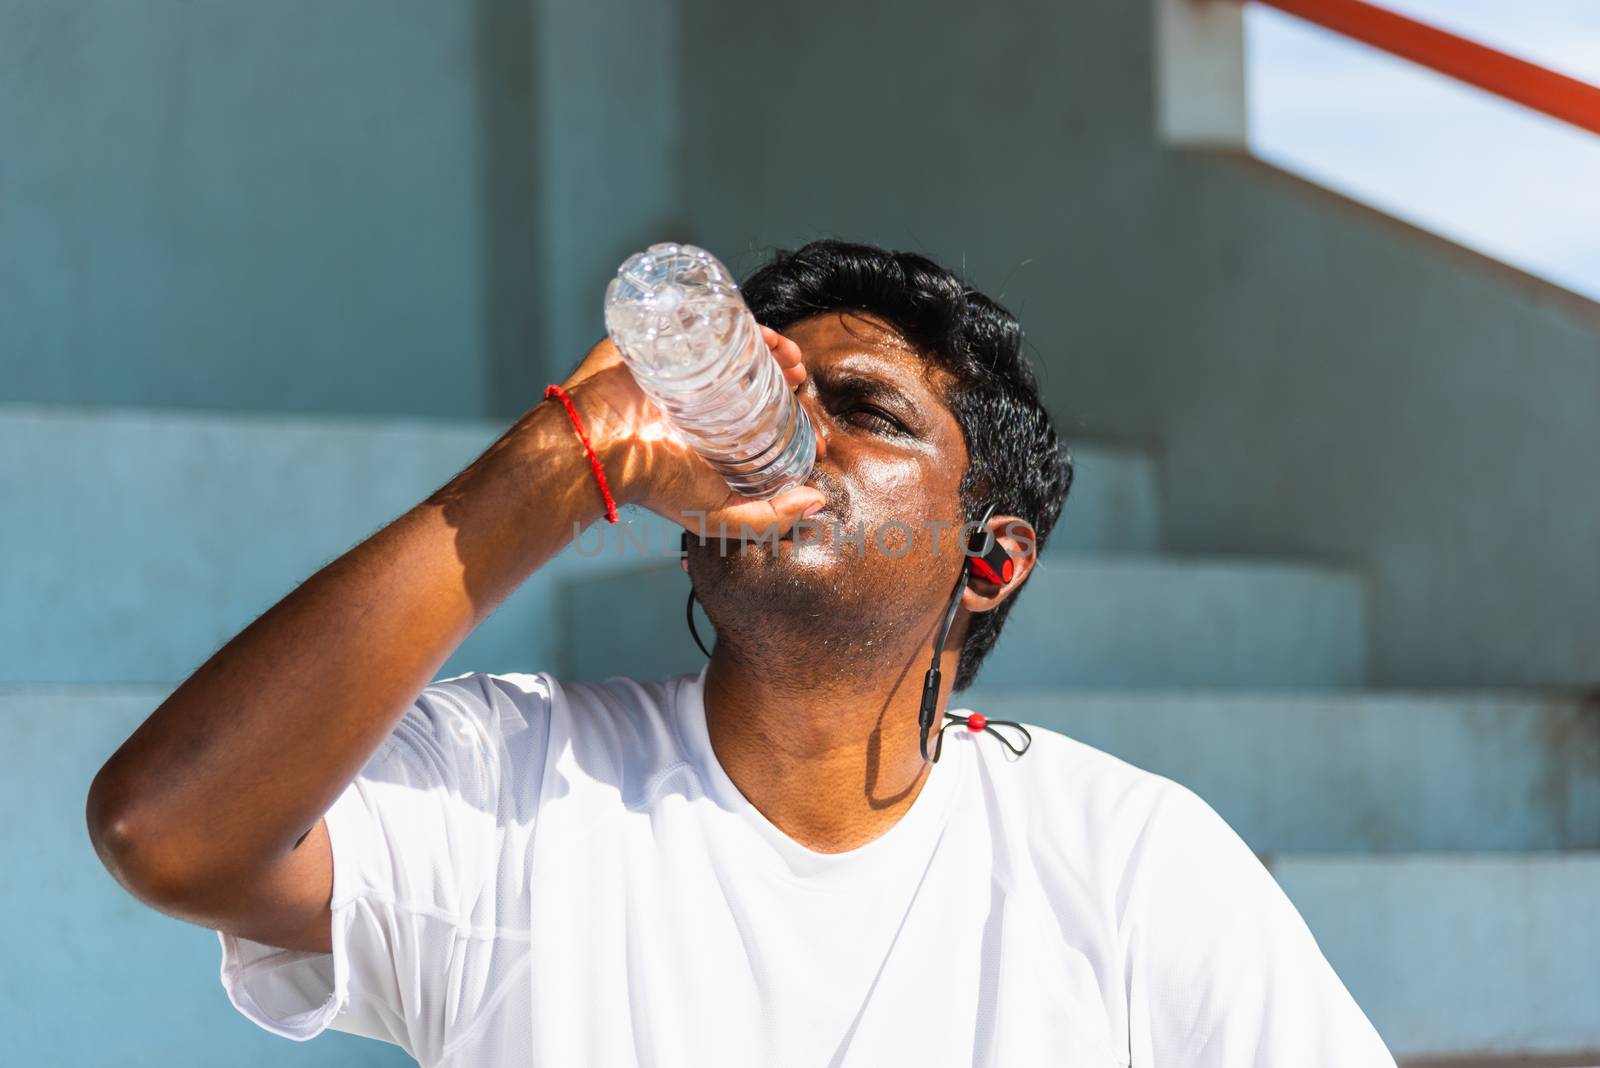 sport runner black man wear athlete headphones he drinking water from a bottle after running at the outdoor street health park by Sorapop